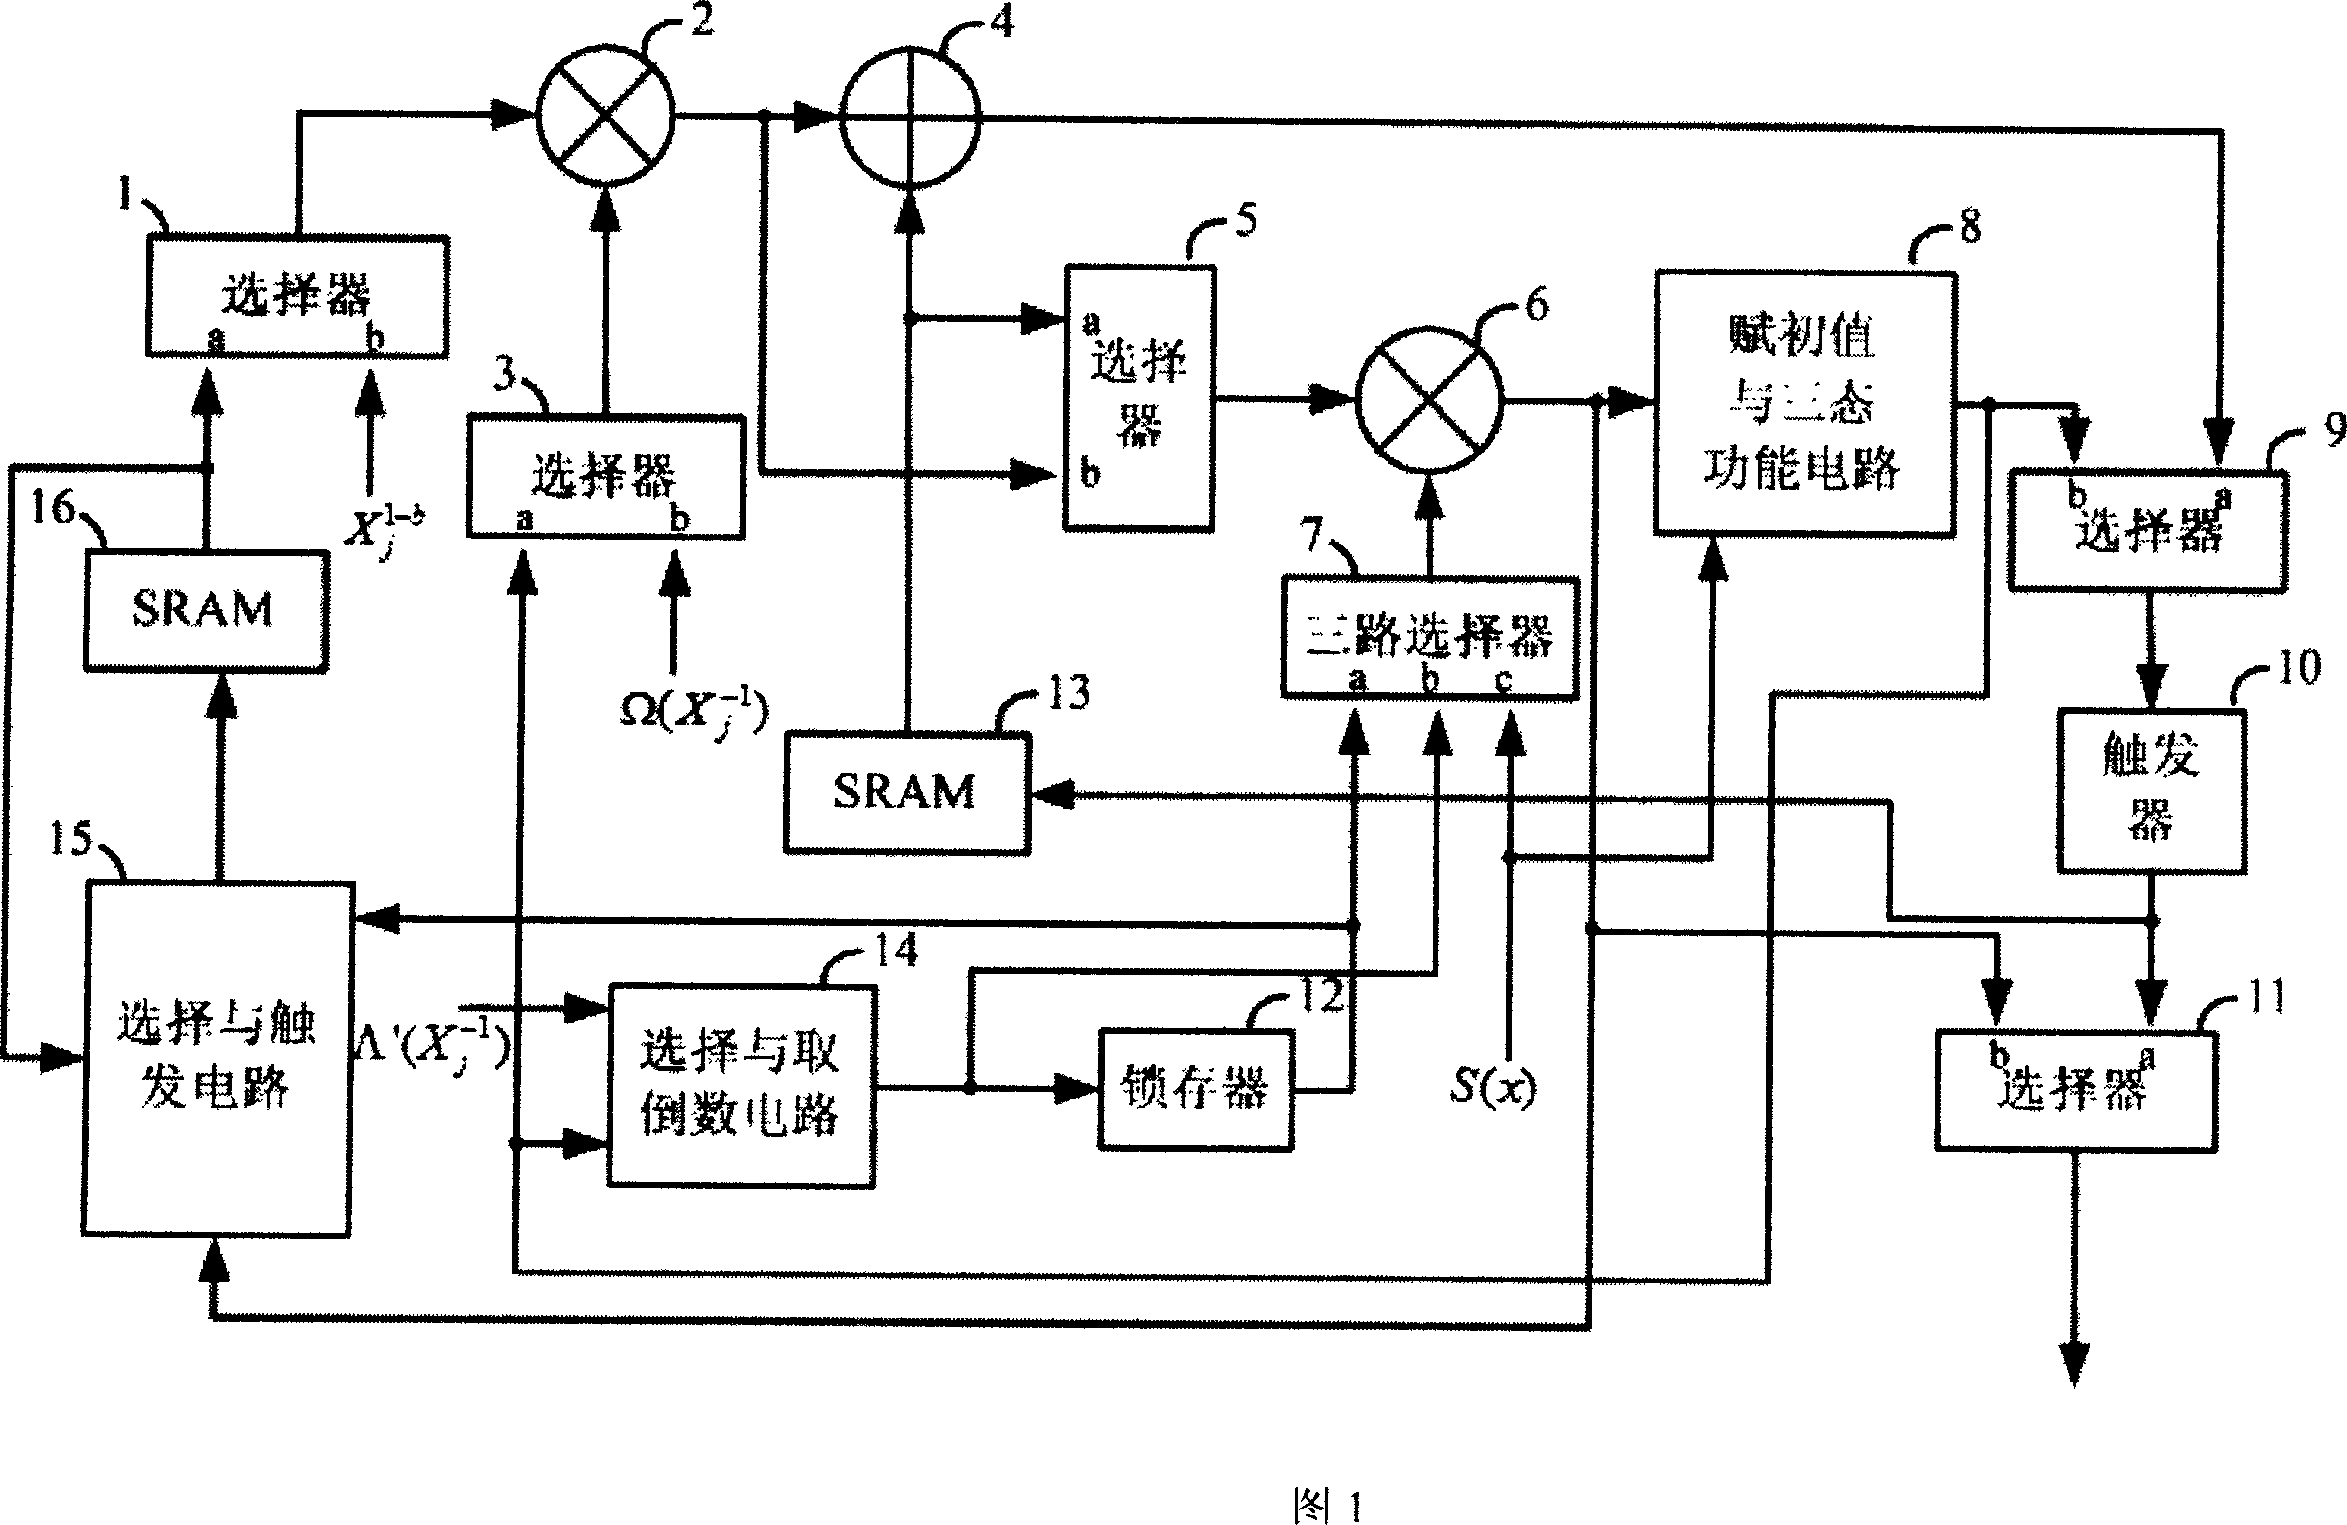 Reed-solomon decoder key equation and error value solving-optimizing circuit